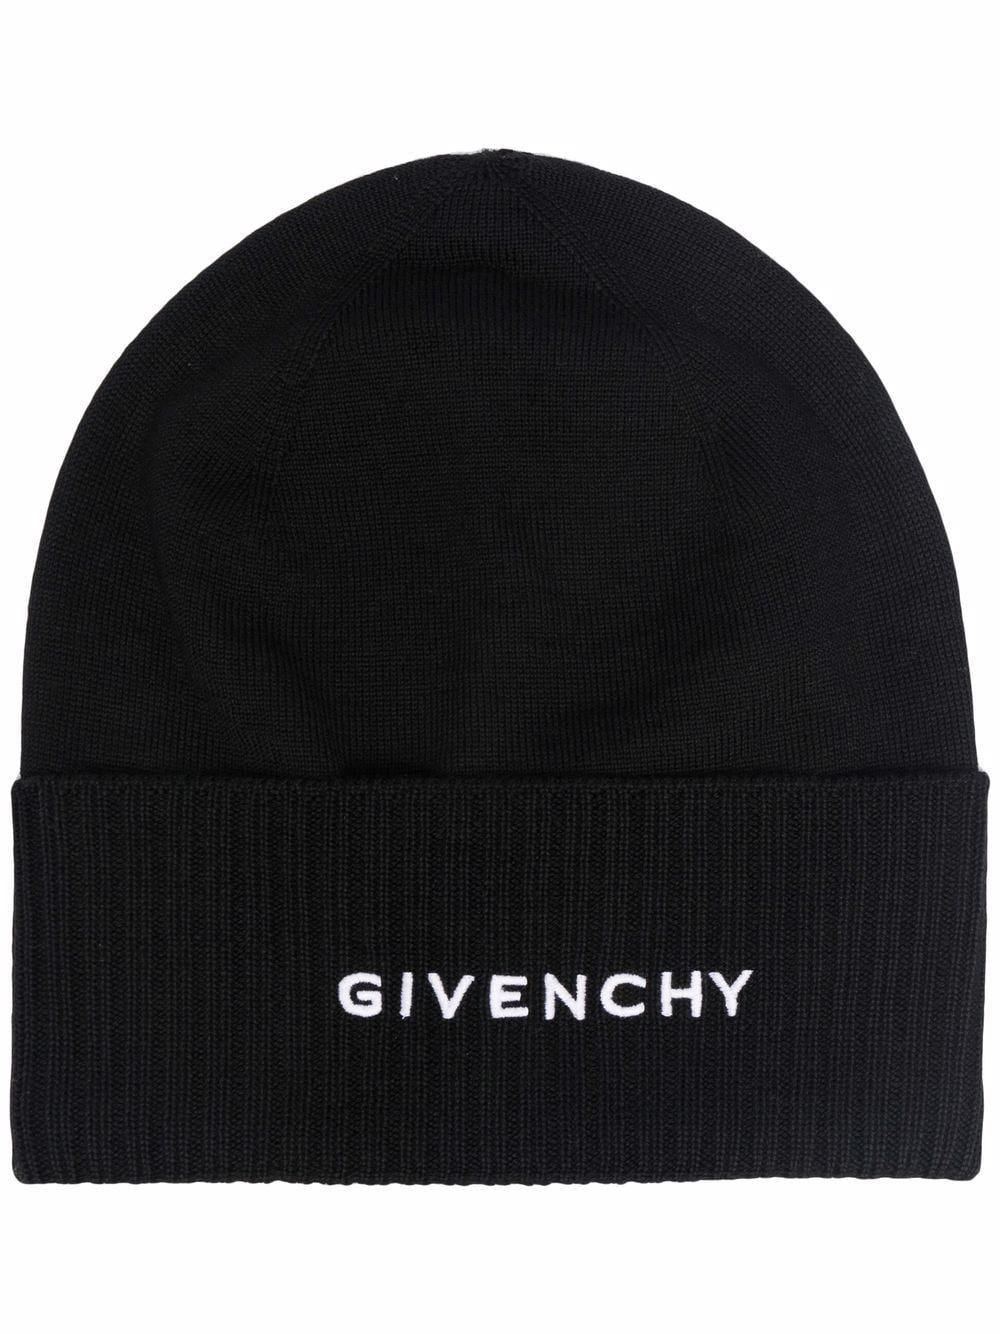 Givenchy logo print beanie - Black von Givenchy